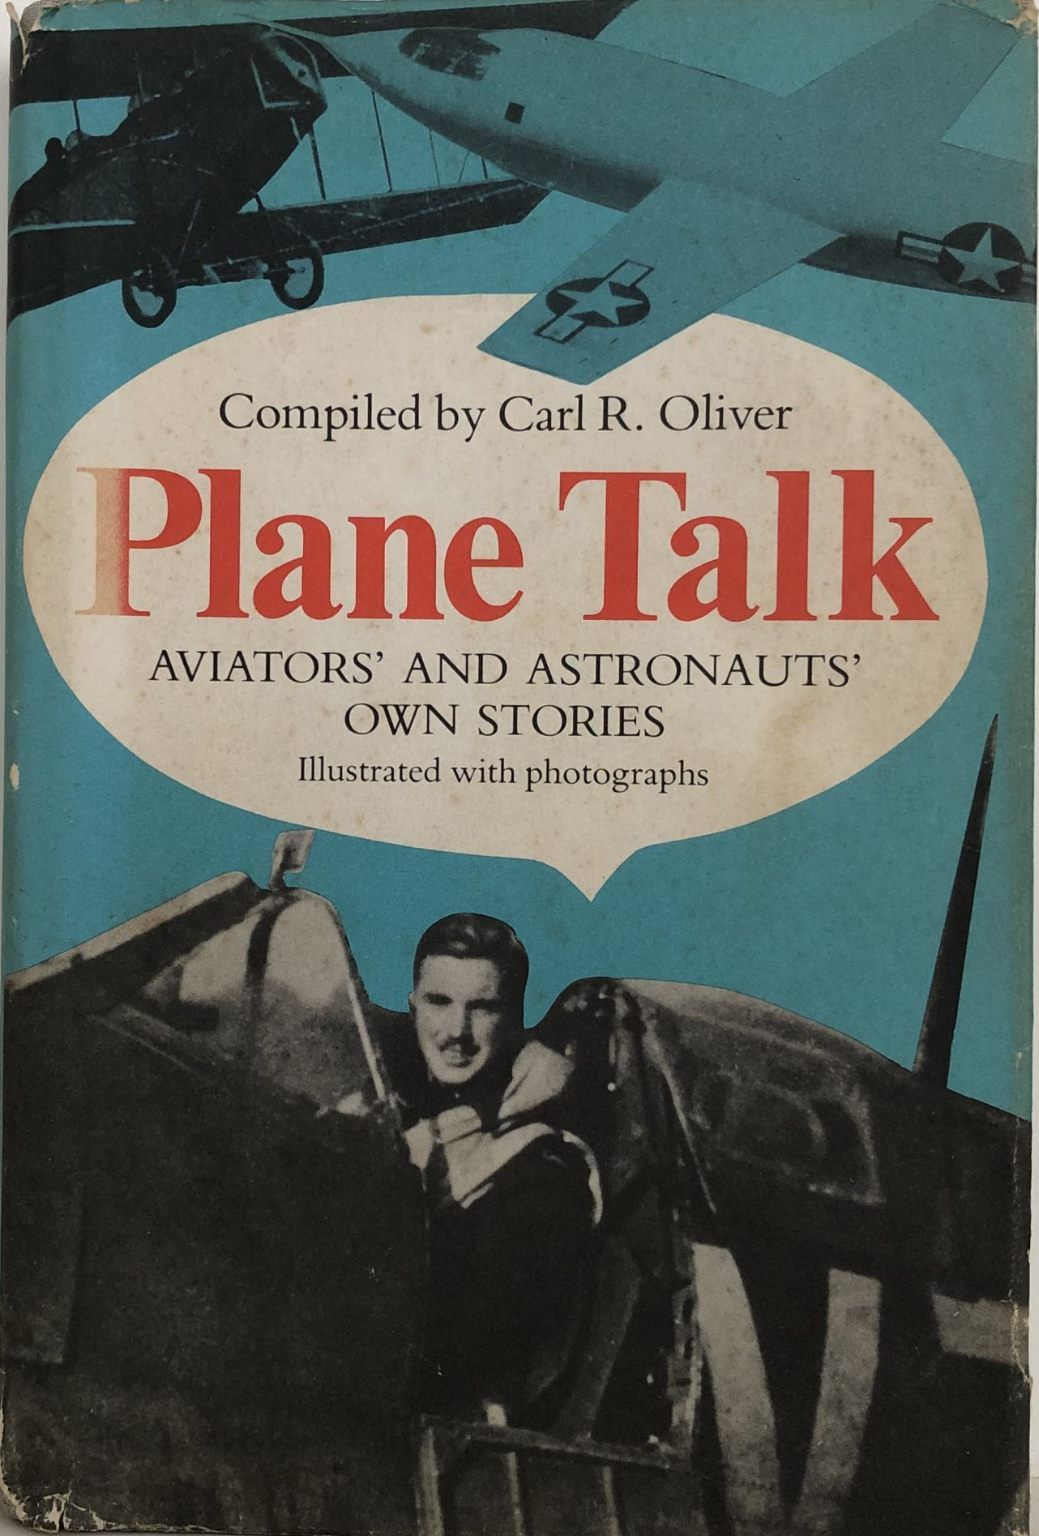 PLANE TALK: Aviators' and Astronauts' Own Stories